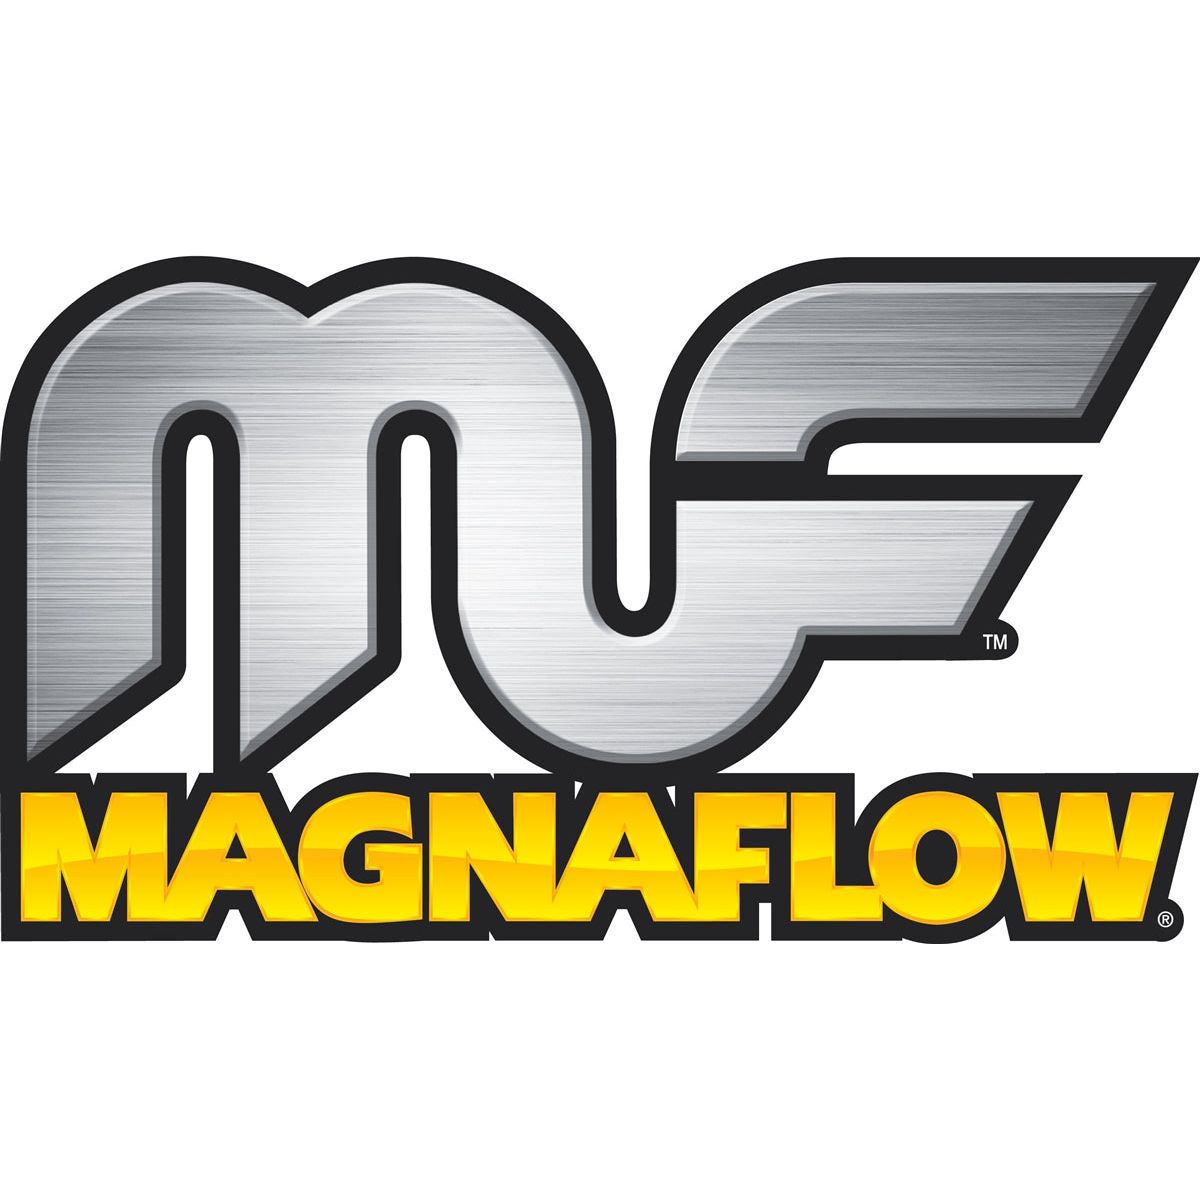 Magnaflow Performance Stainless Steel Axle Back Exhaust System For 07-18 Jeep Wrangler JK 2 - 4 Door Models